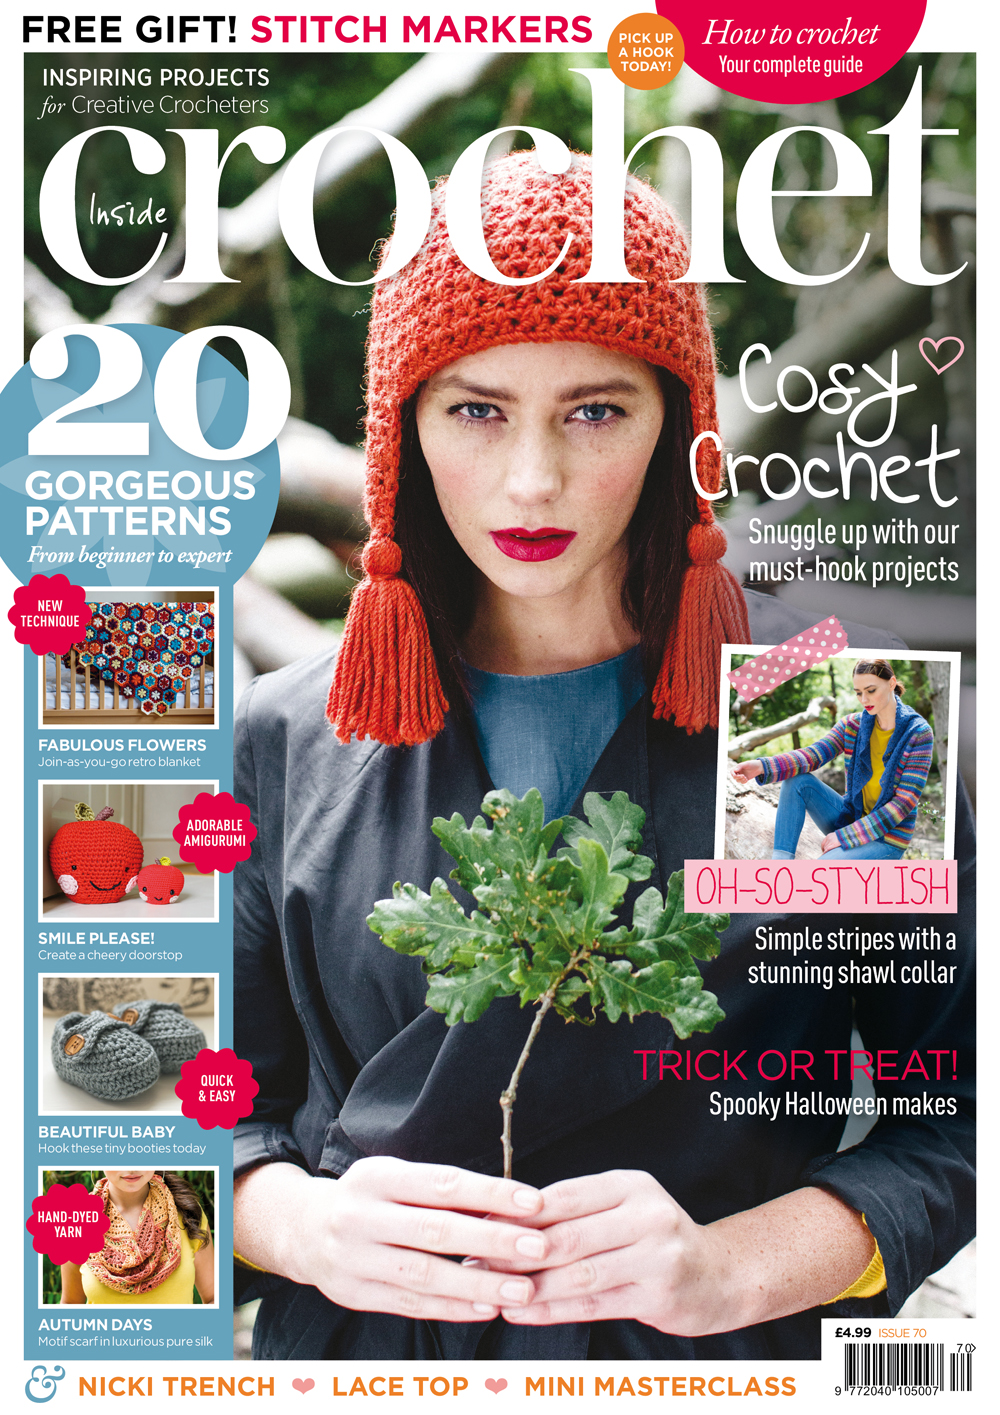 Inside Crochet // Issue 70